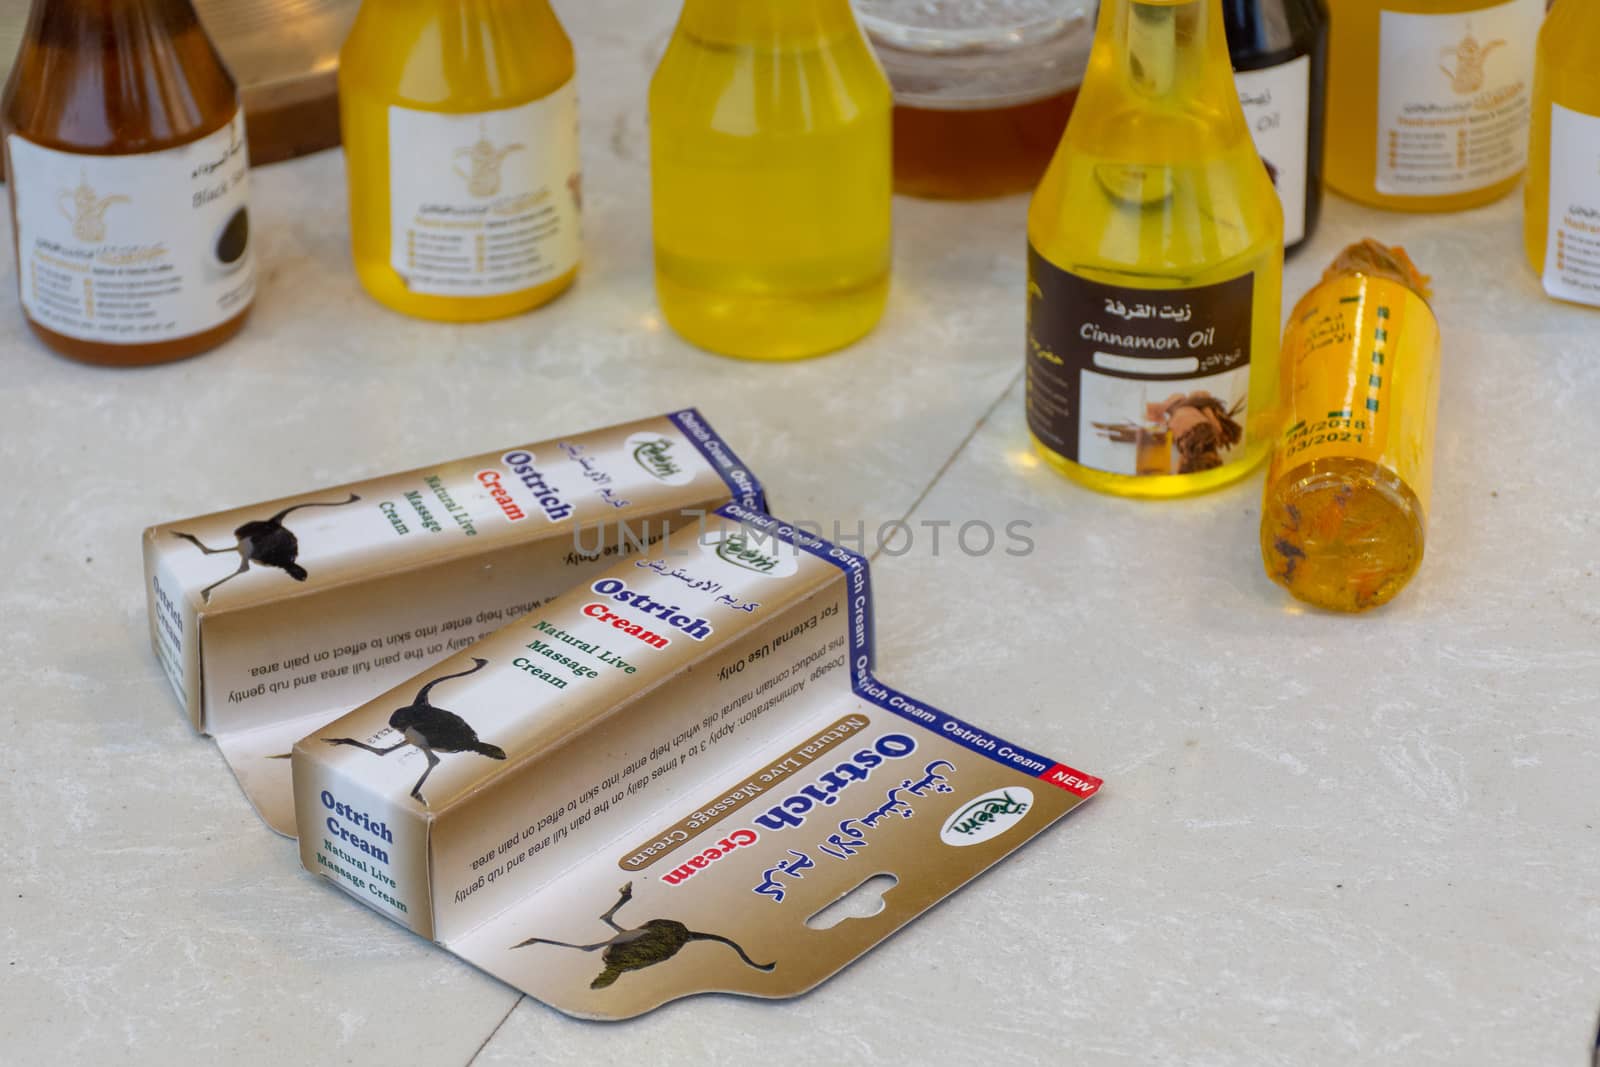 "Dubai, Dubai/United Arab Emirates - 4/6/2019: Ostrich massage cream for sale at Global Market in Dubai, United Arab Emirates. sitting on a table in a package with other oils and products."